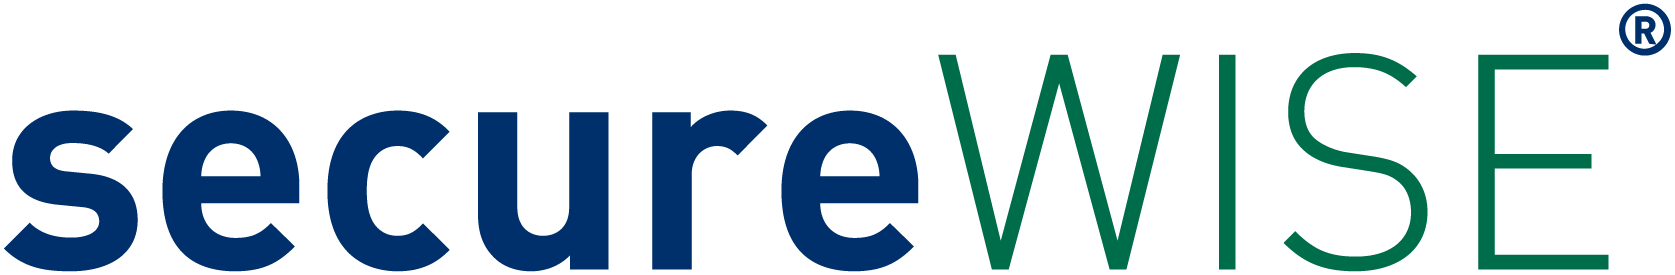 secureWISE logo.